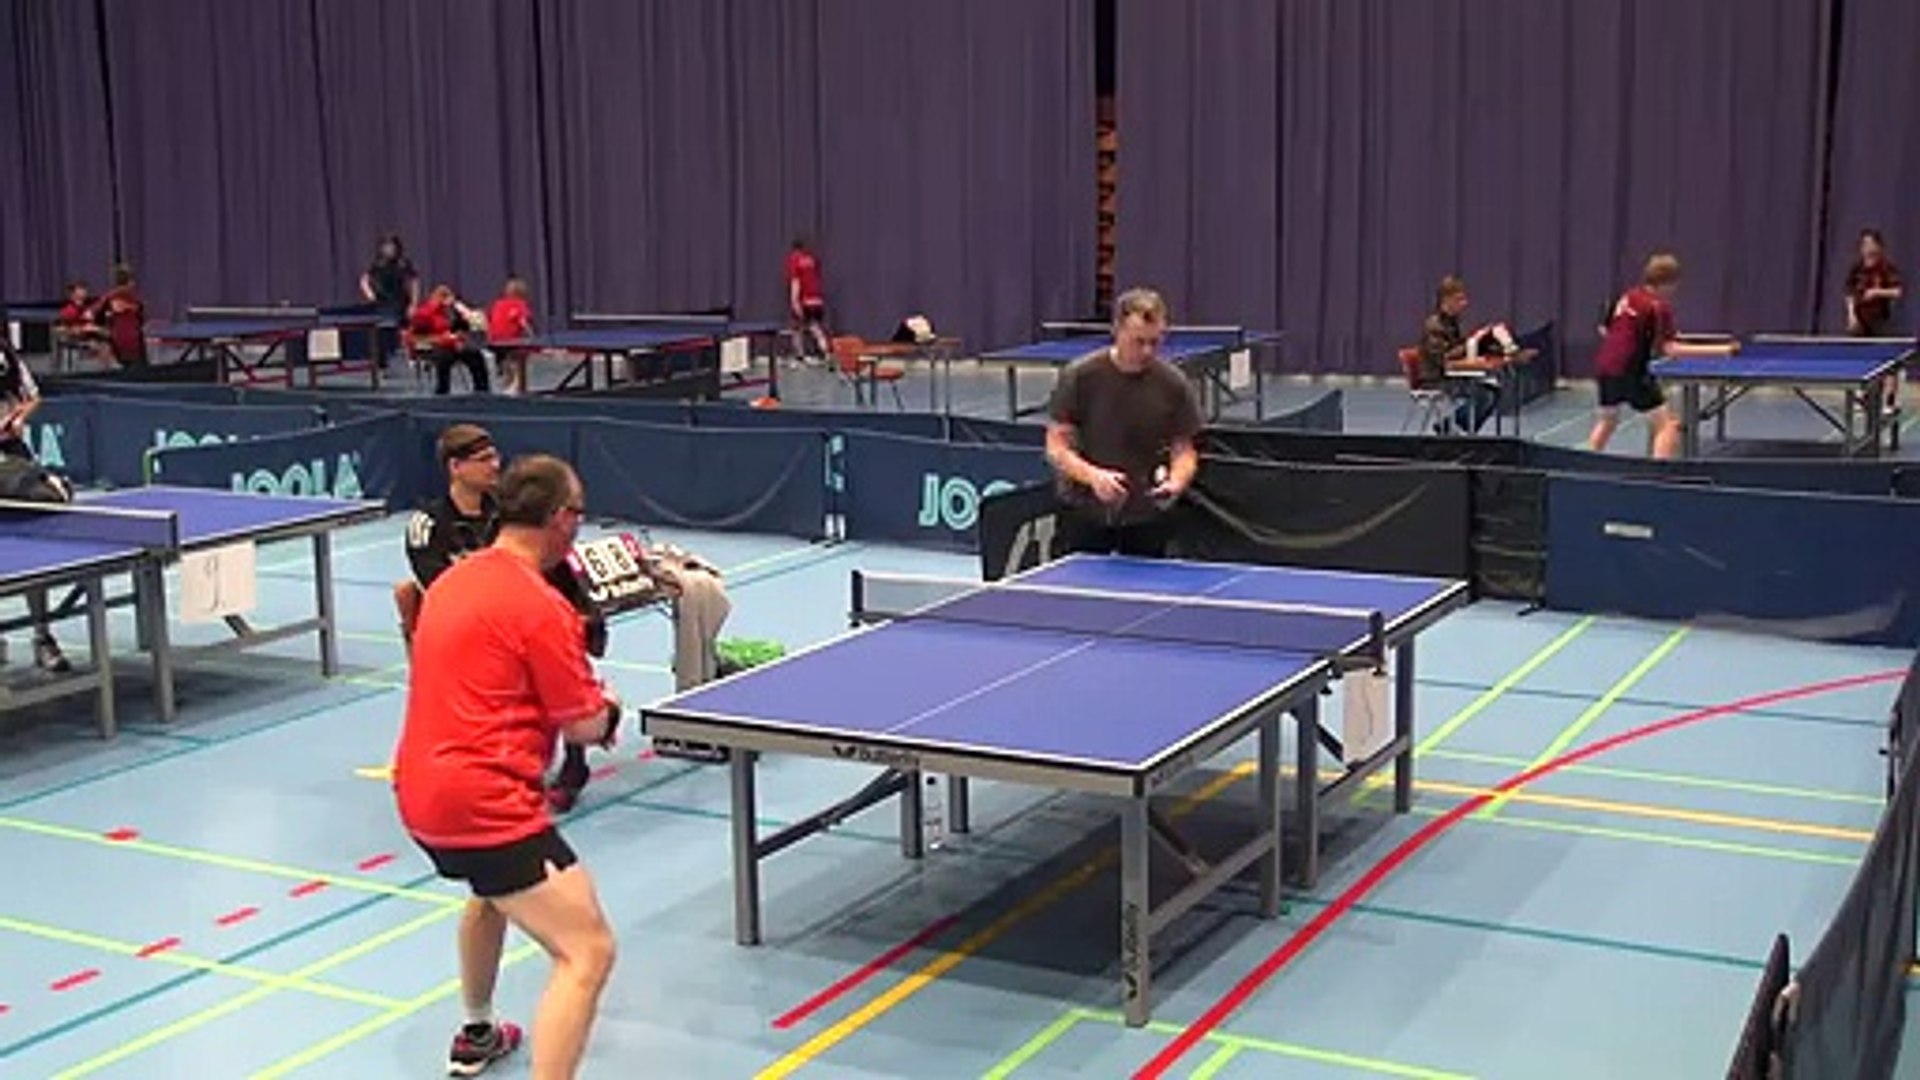 Coup incroyable pendant un match de ping-pong - Vidéo Dailymotion